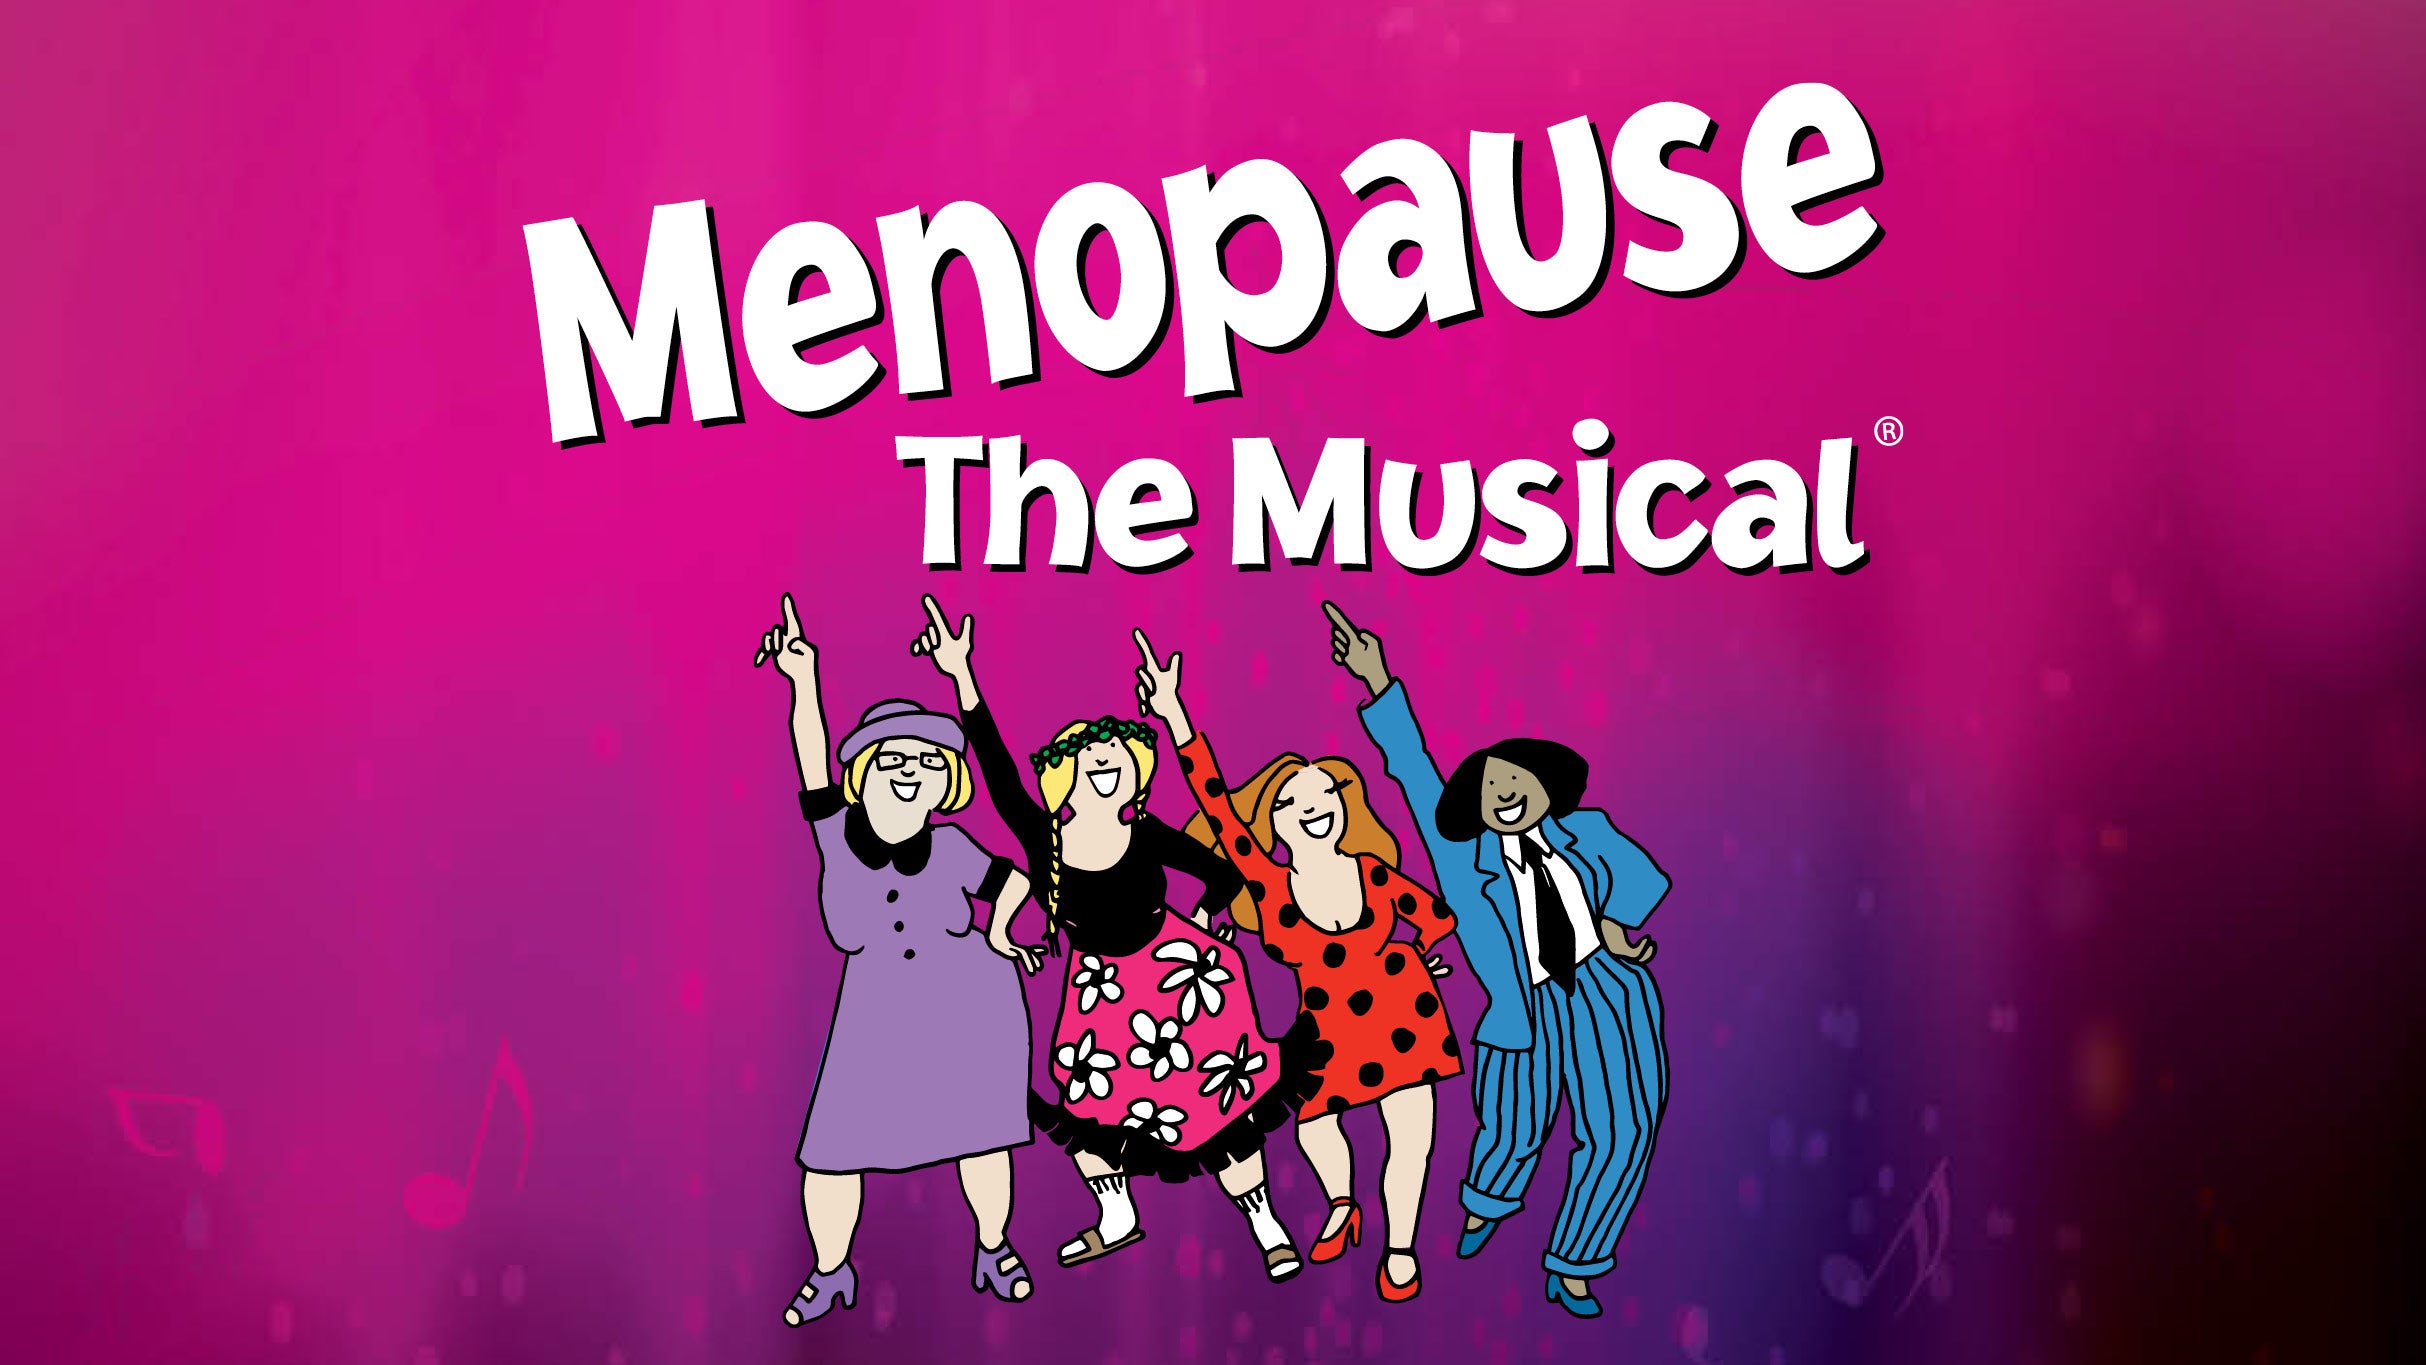 Menopause The Musical (Reno, NV) in Reno promo photo for Partner presale offer code